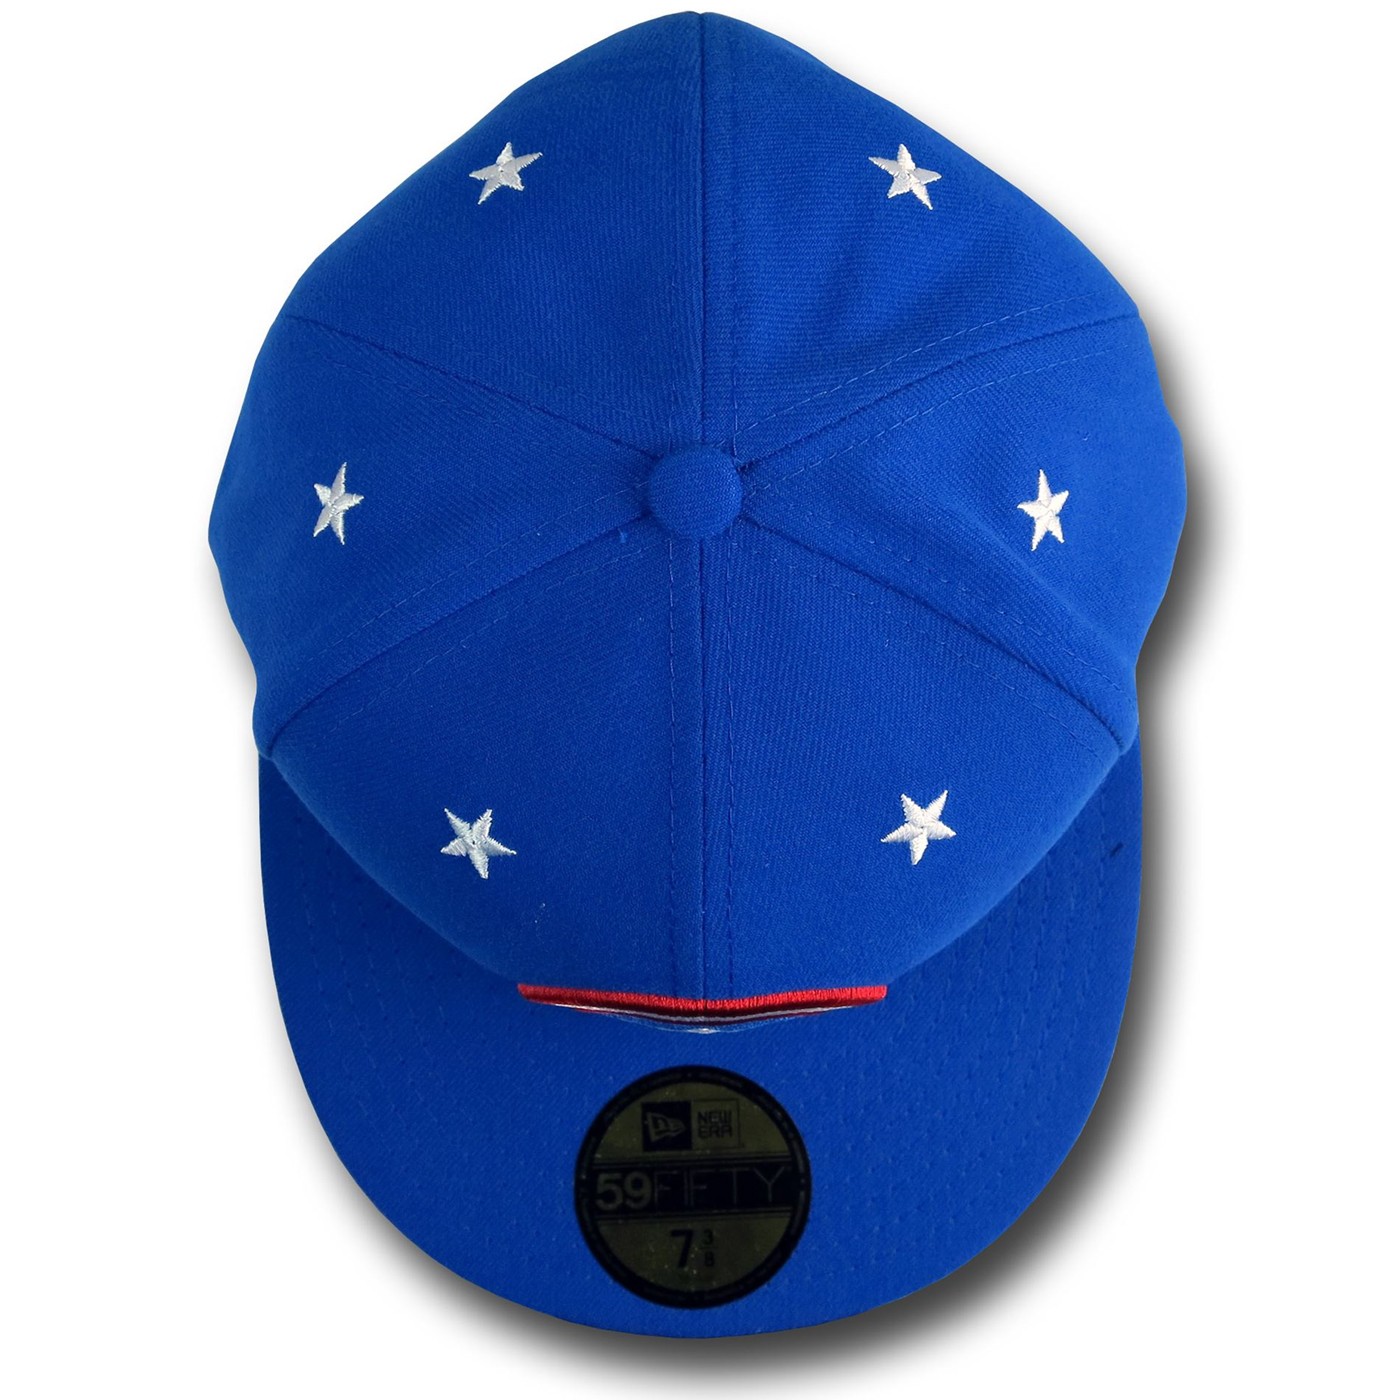 Captain America Symbol Stargazer 59Fifty Hat